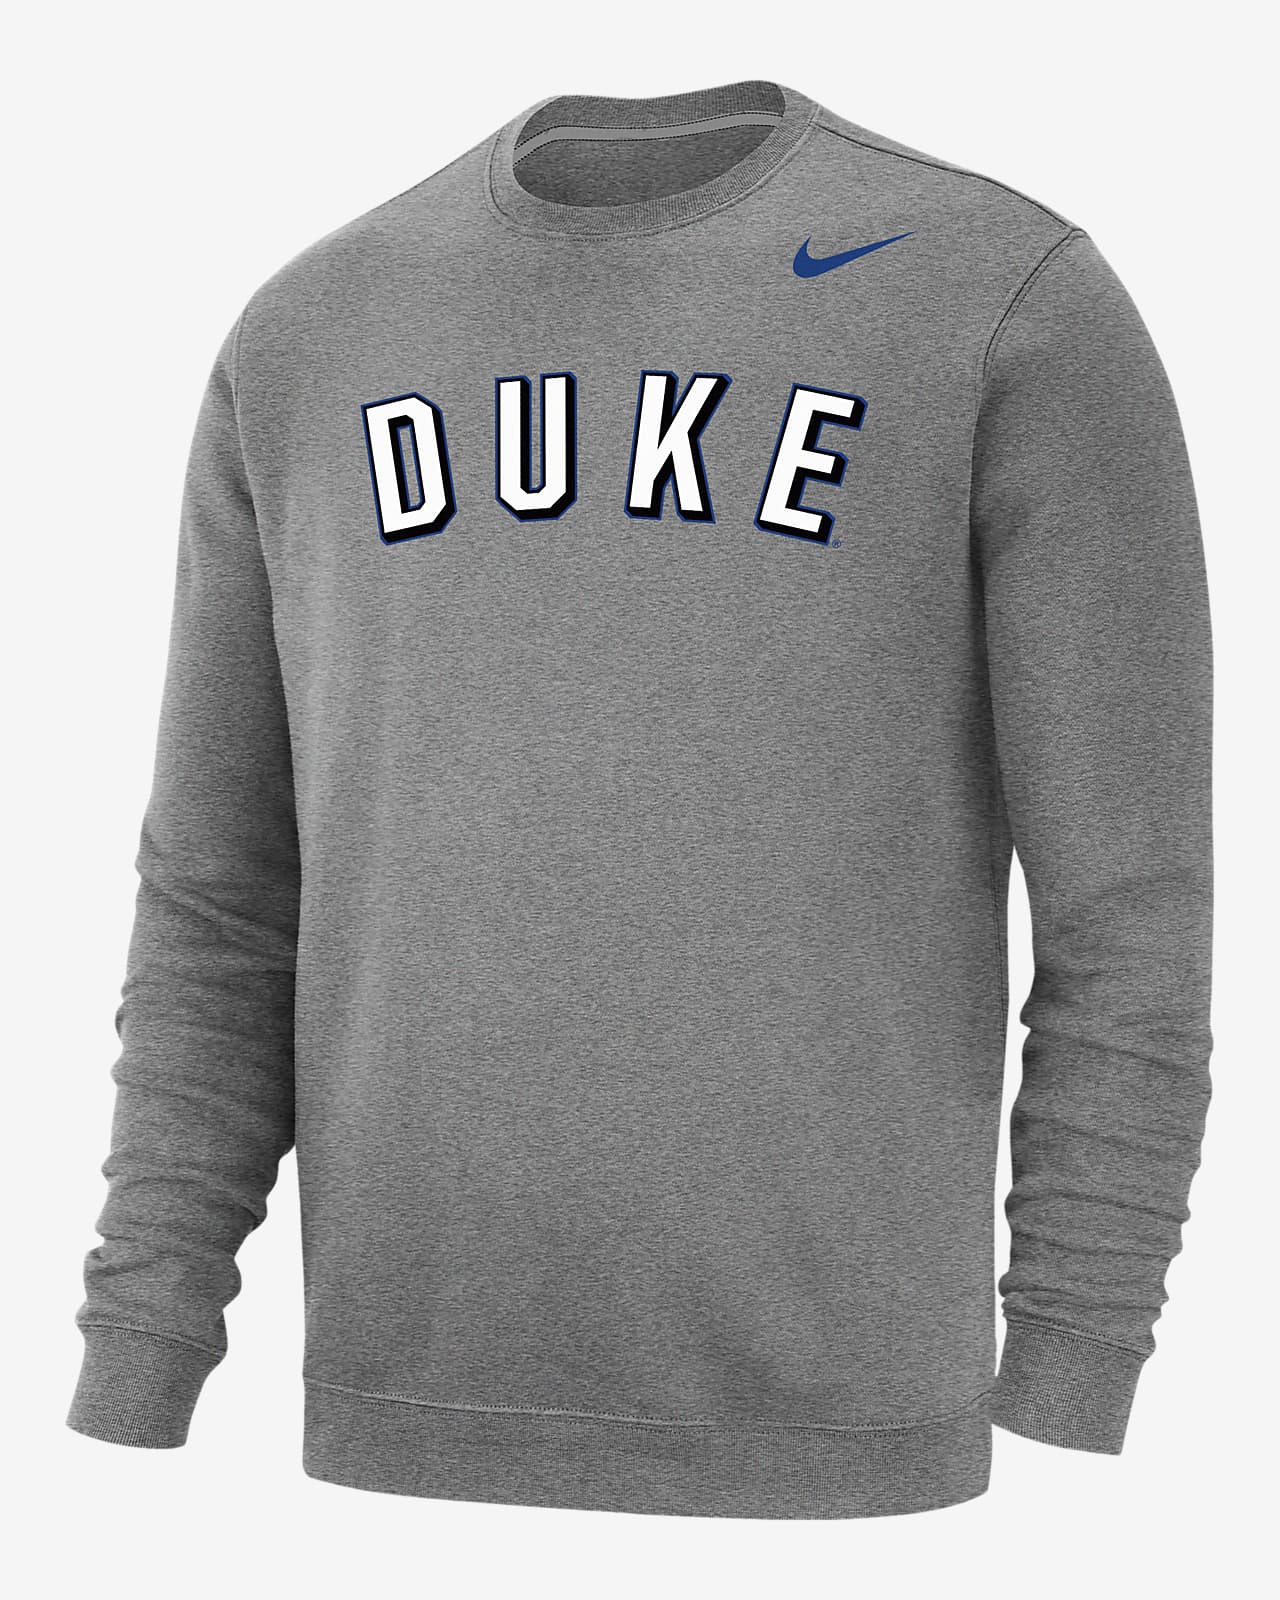 Duke Club Fleece Men's Nike College Sweatshirt